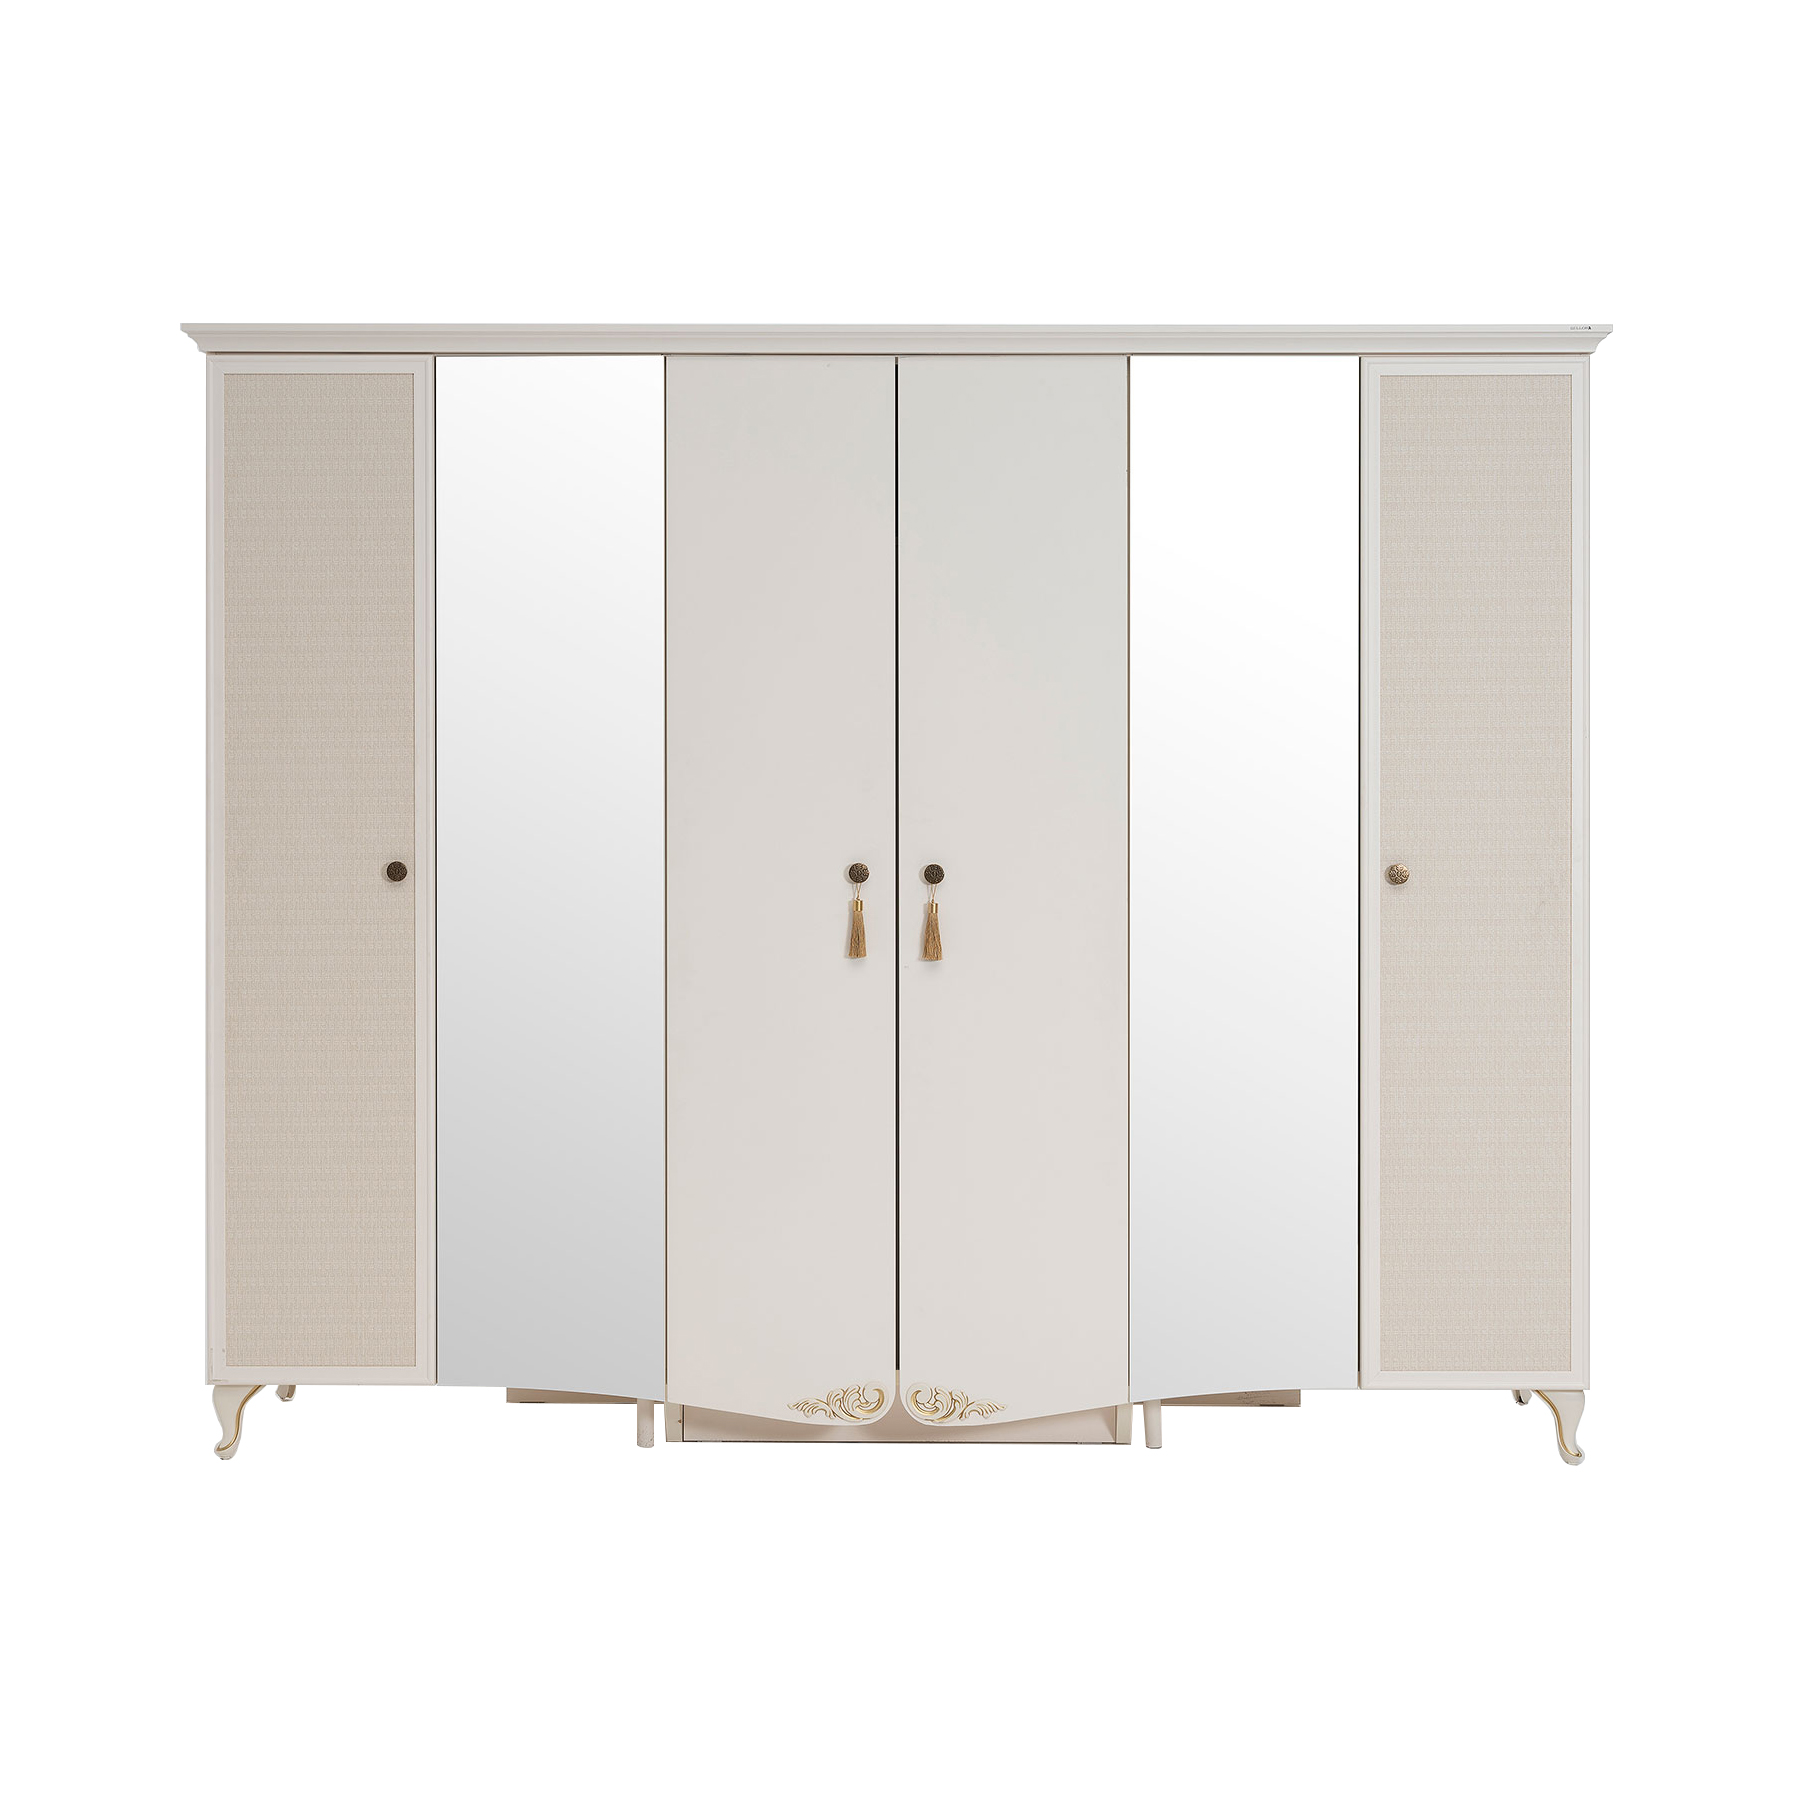 Шкаф Bellona Perlino, шестидверный, цвет: белый, размер 276х65х222 см (PERL-34)PERL-34